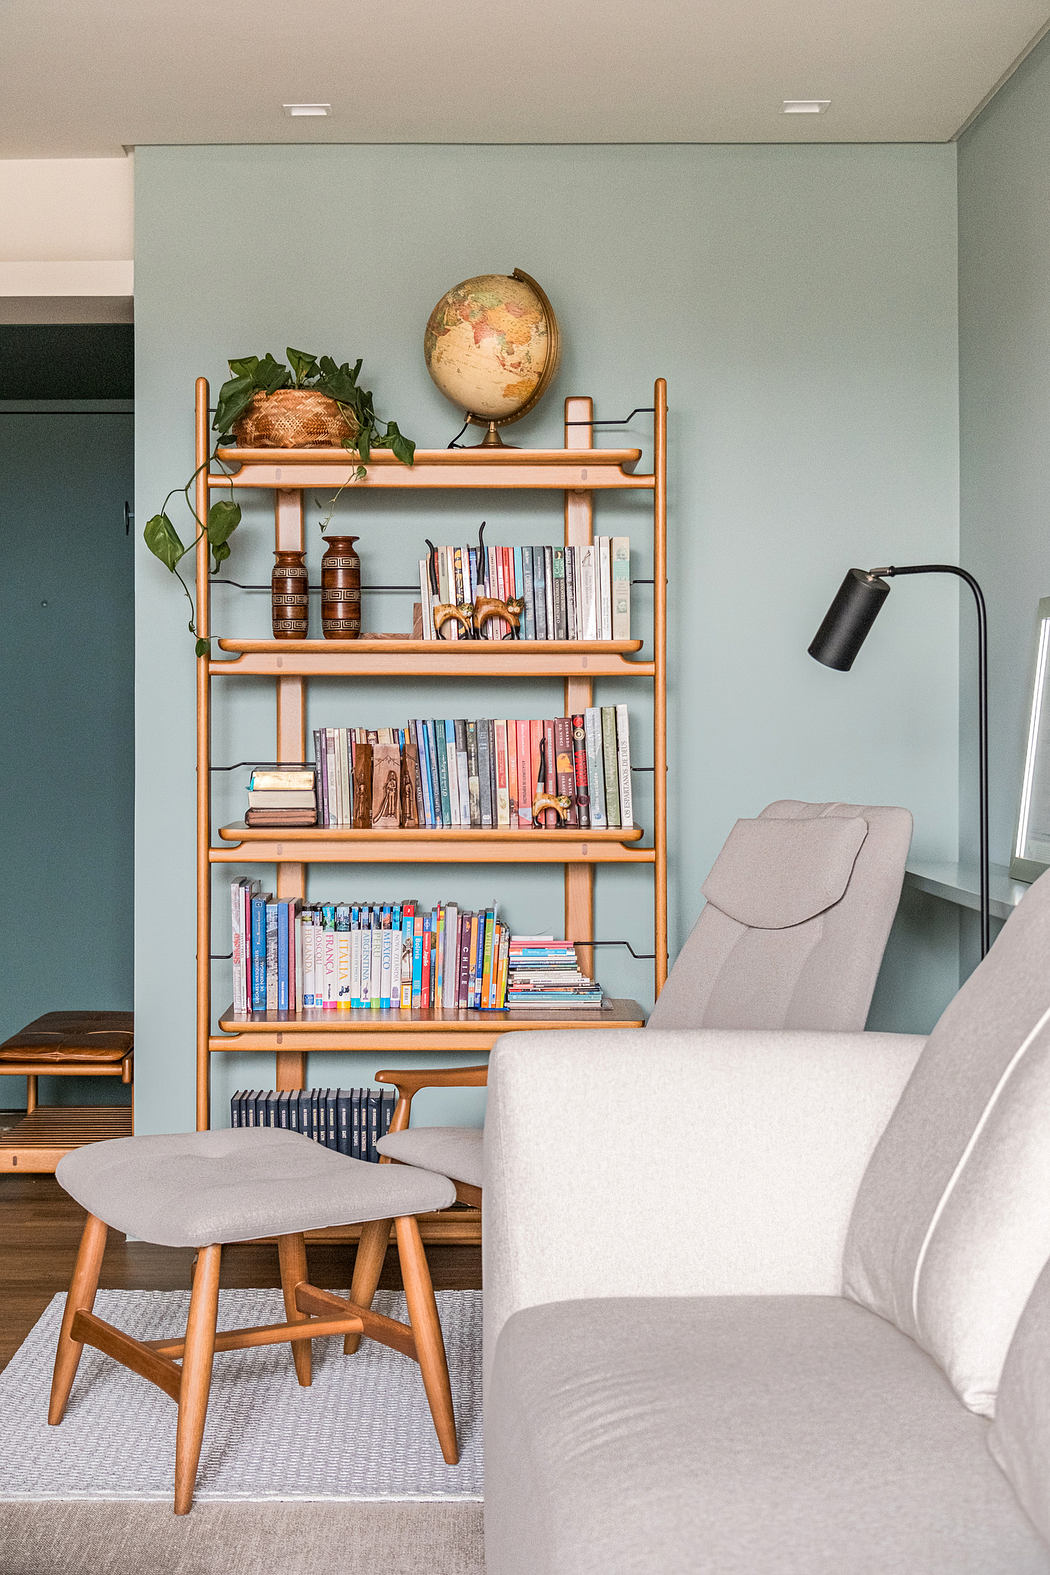 Modern living room corner with bookshelf, chair, and stylish decor.